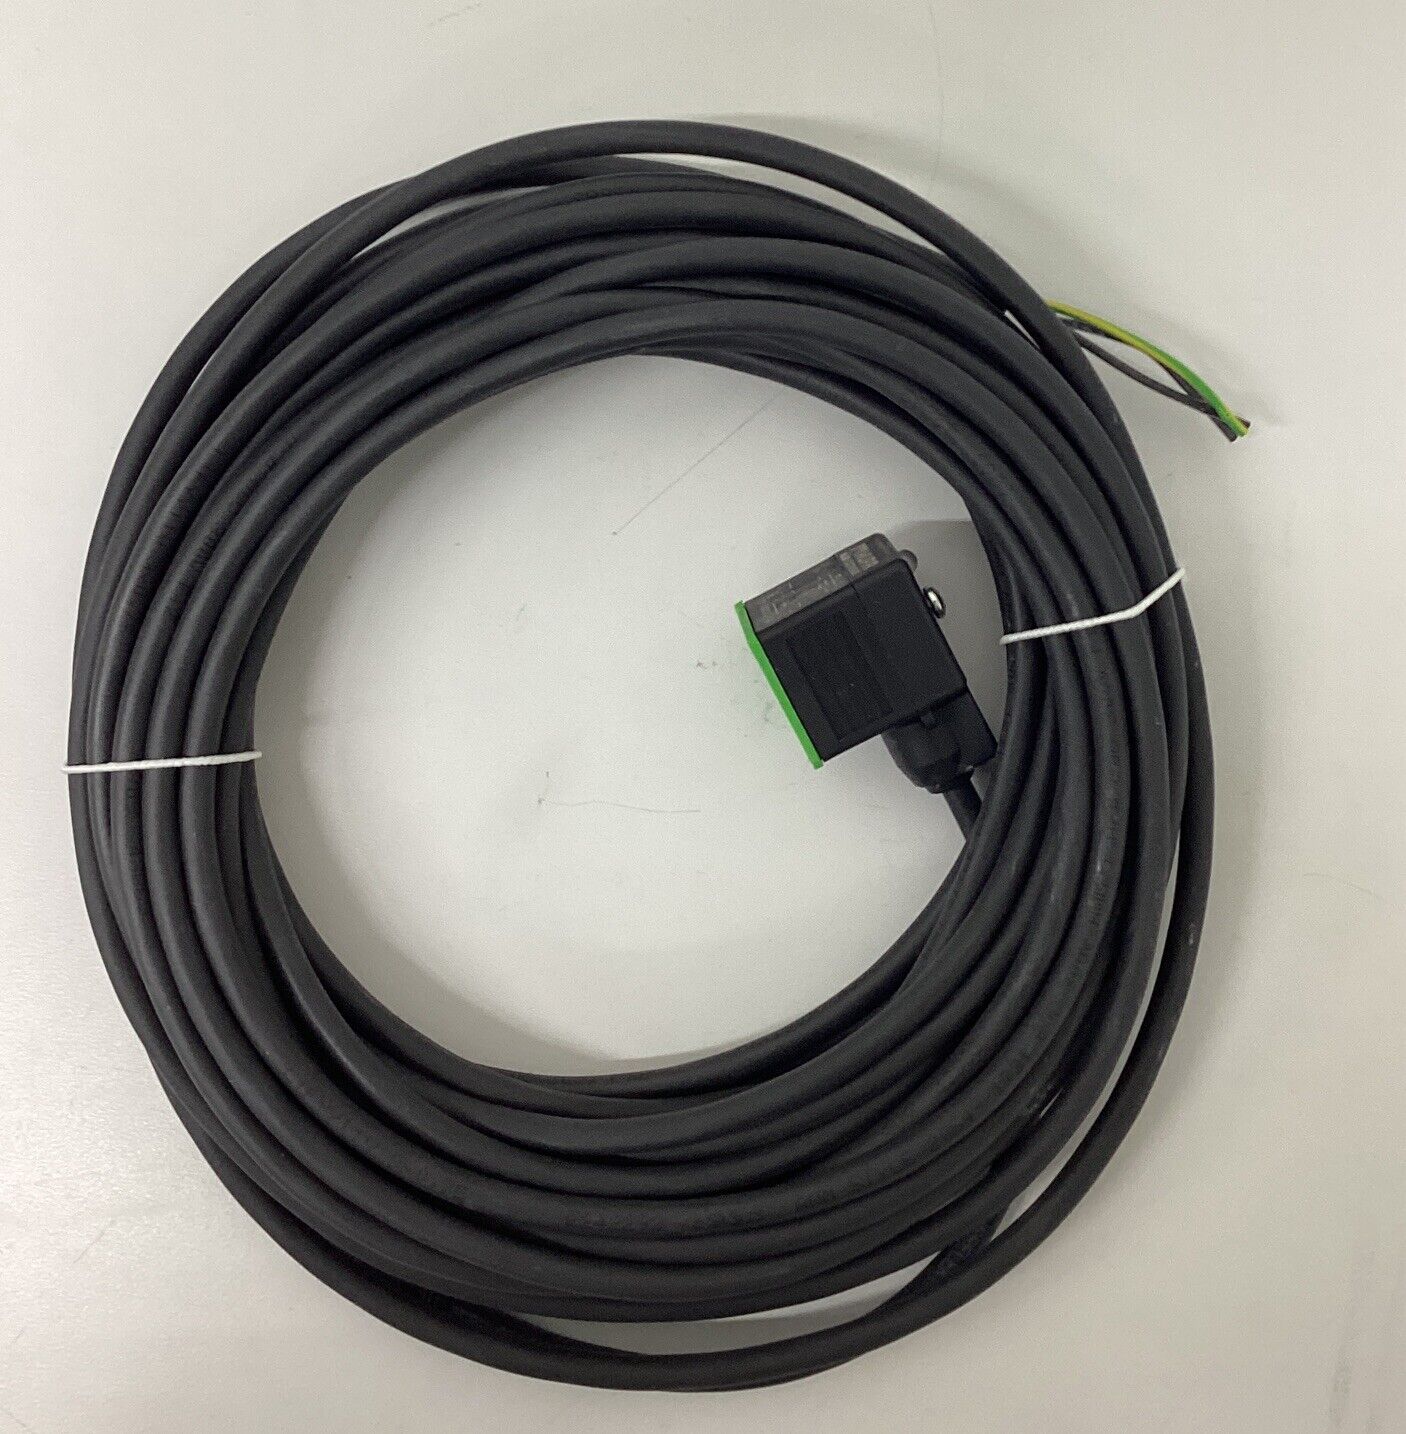 Murr 7000-18311-62610000  3-Wire Single End MSUD Valve Plug Cable 10M (CBL158)